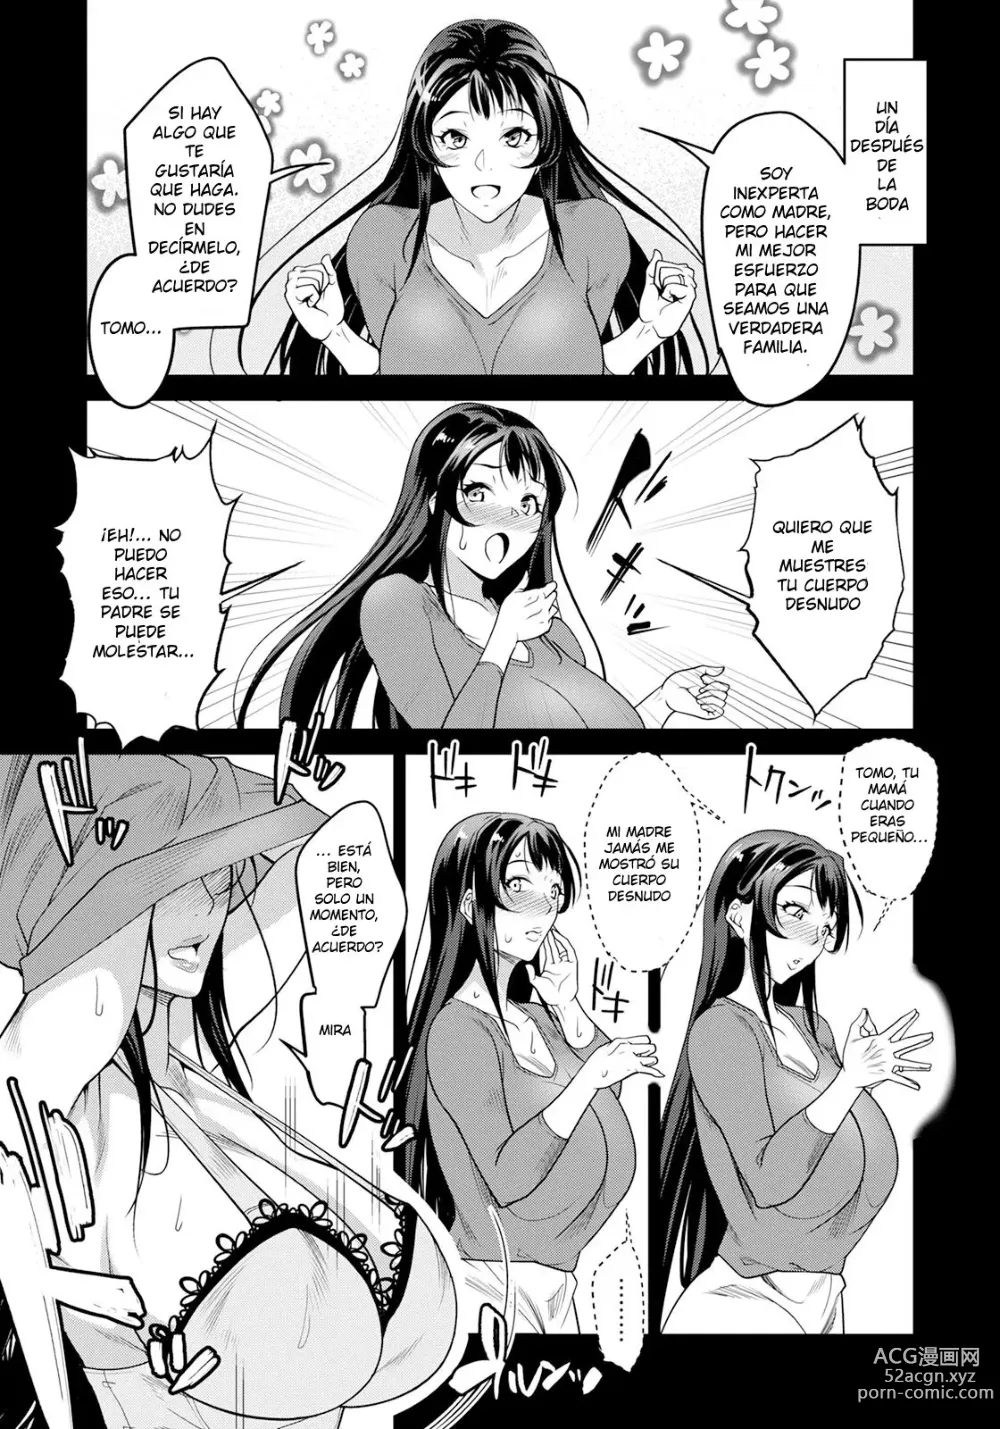 Page 7 of manga Segundo matrimonio corrupto